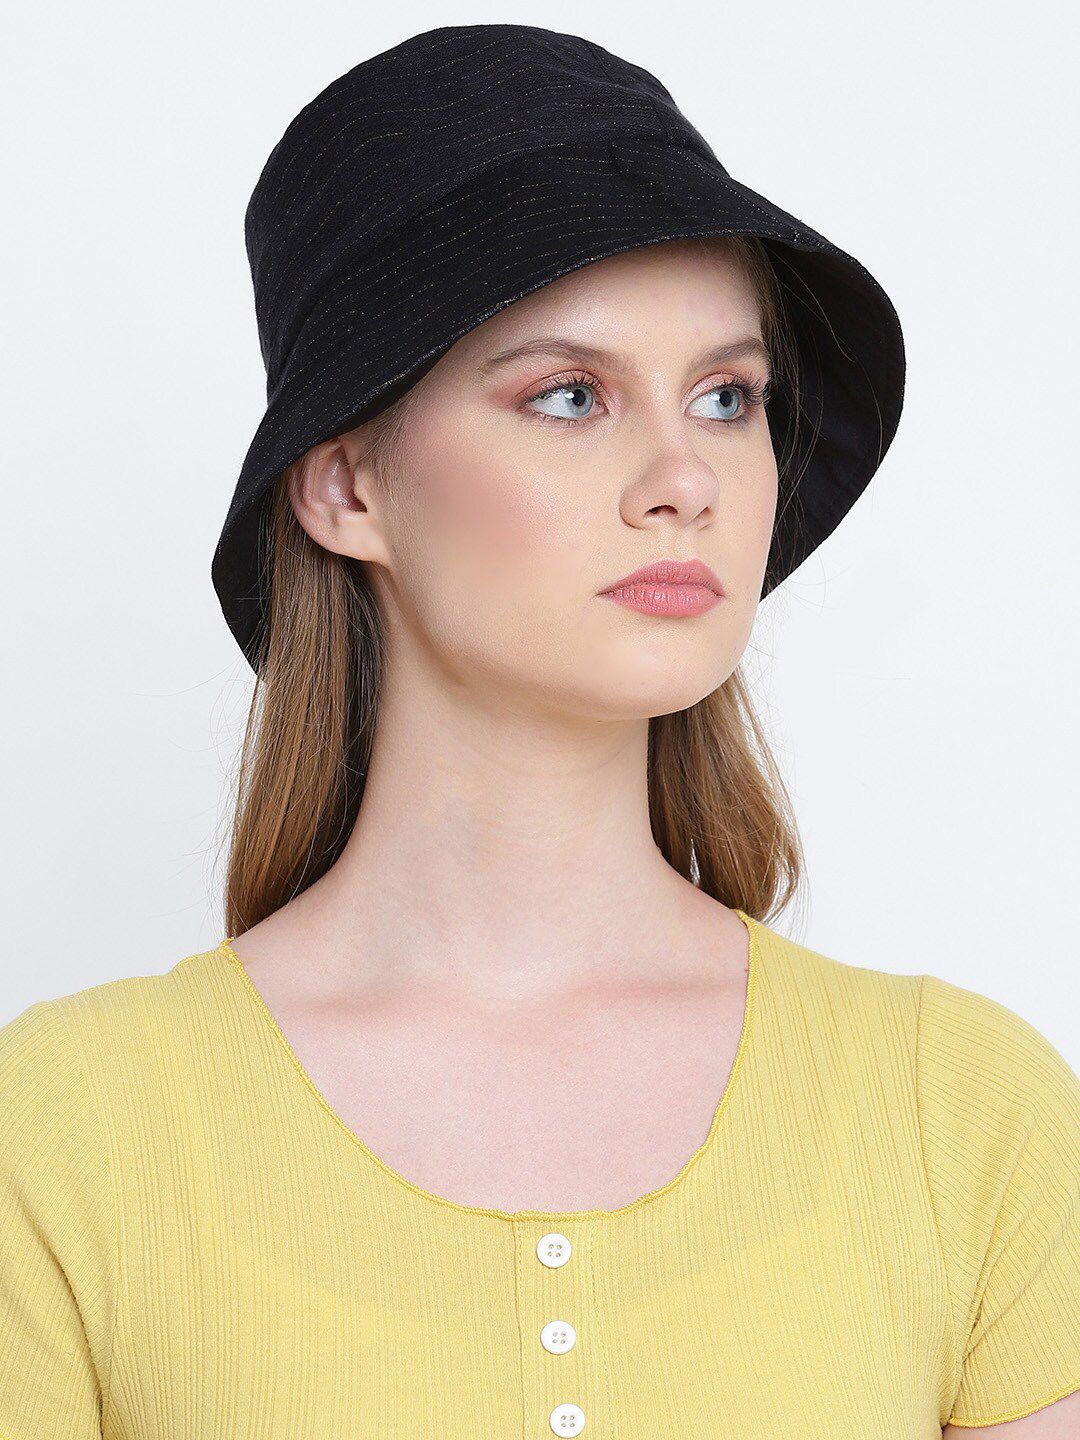 Oxolloxo Women Black & White Striped Reversible Bucket Hat Price in India